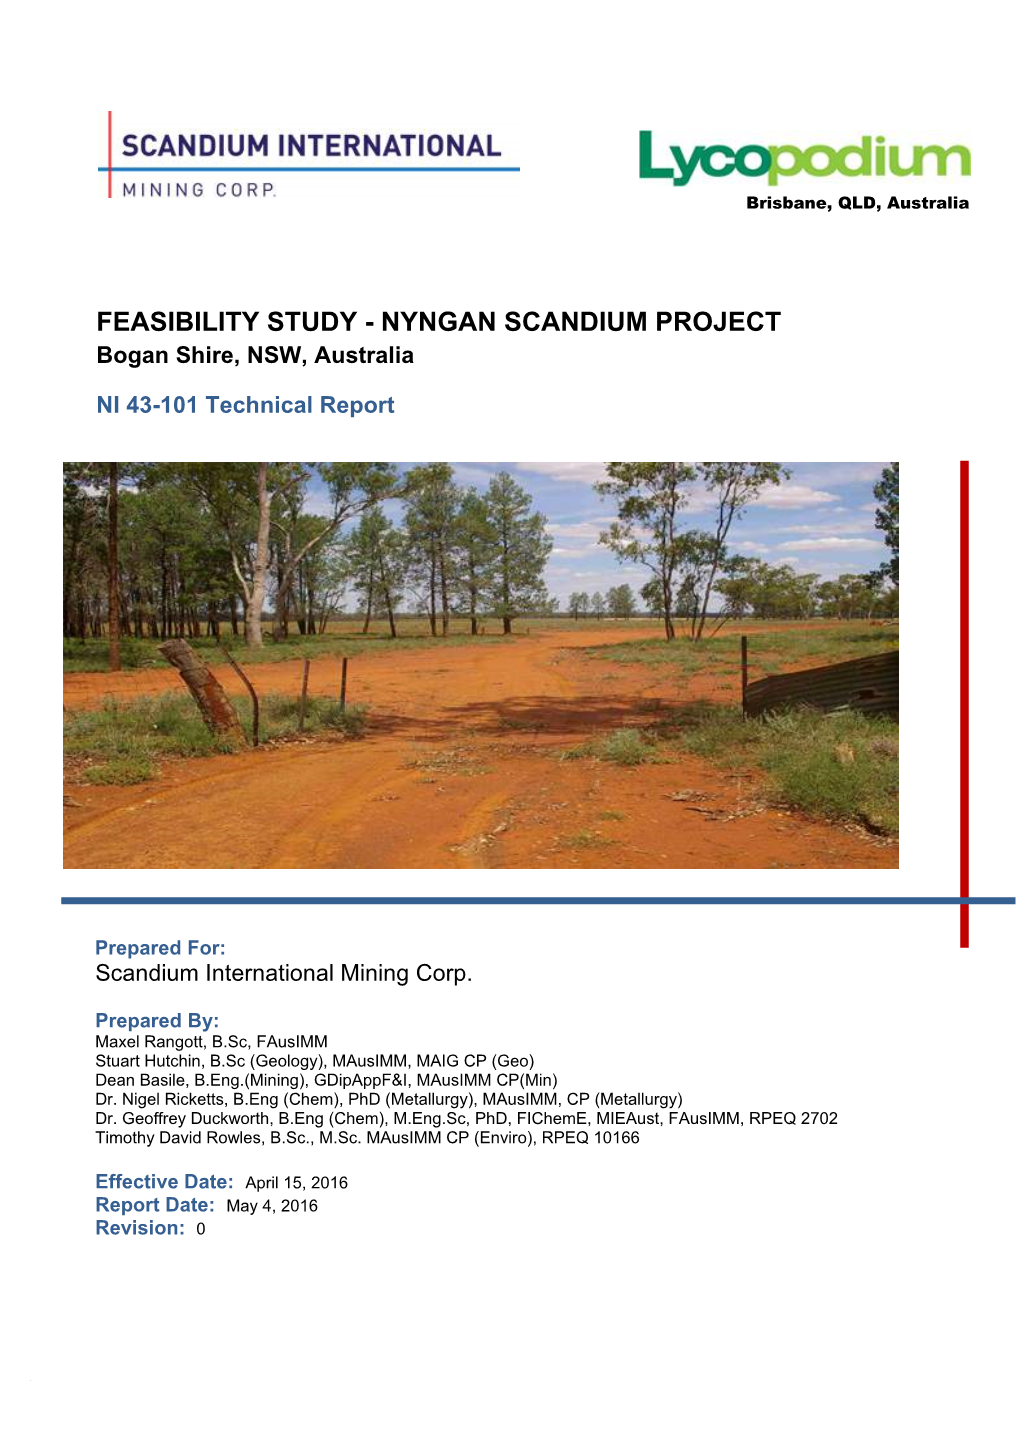 FEASIBILITY STUDY - NYNGAN SCANDIUM PROJECT Bogan Shire, NSW, Australia